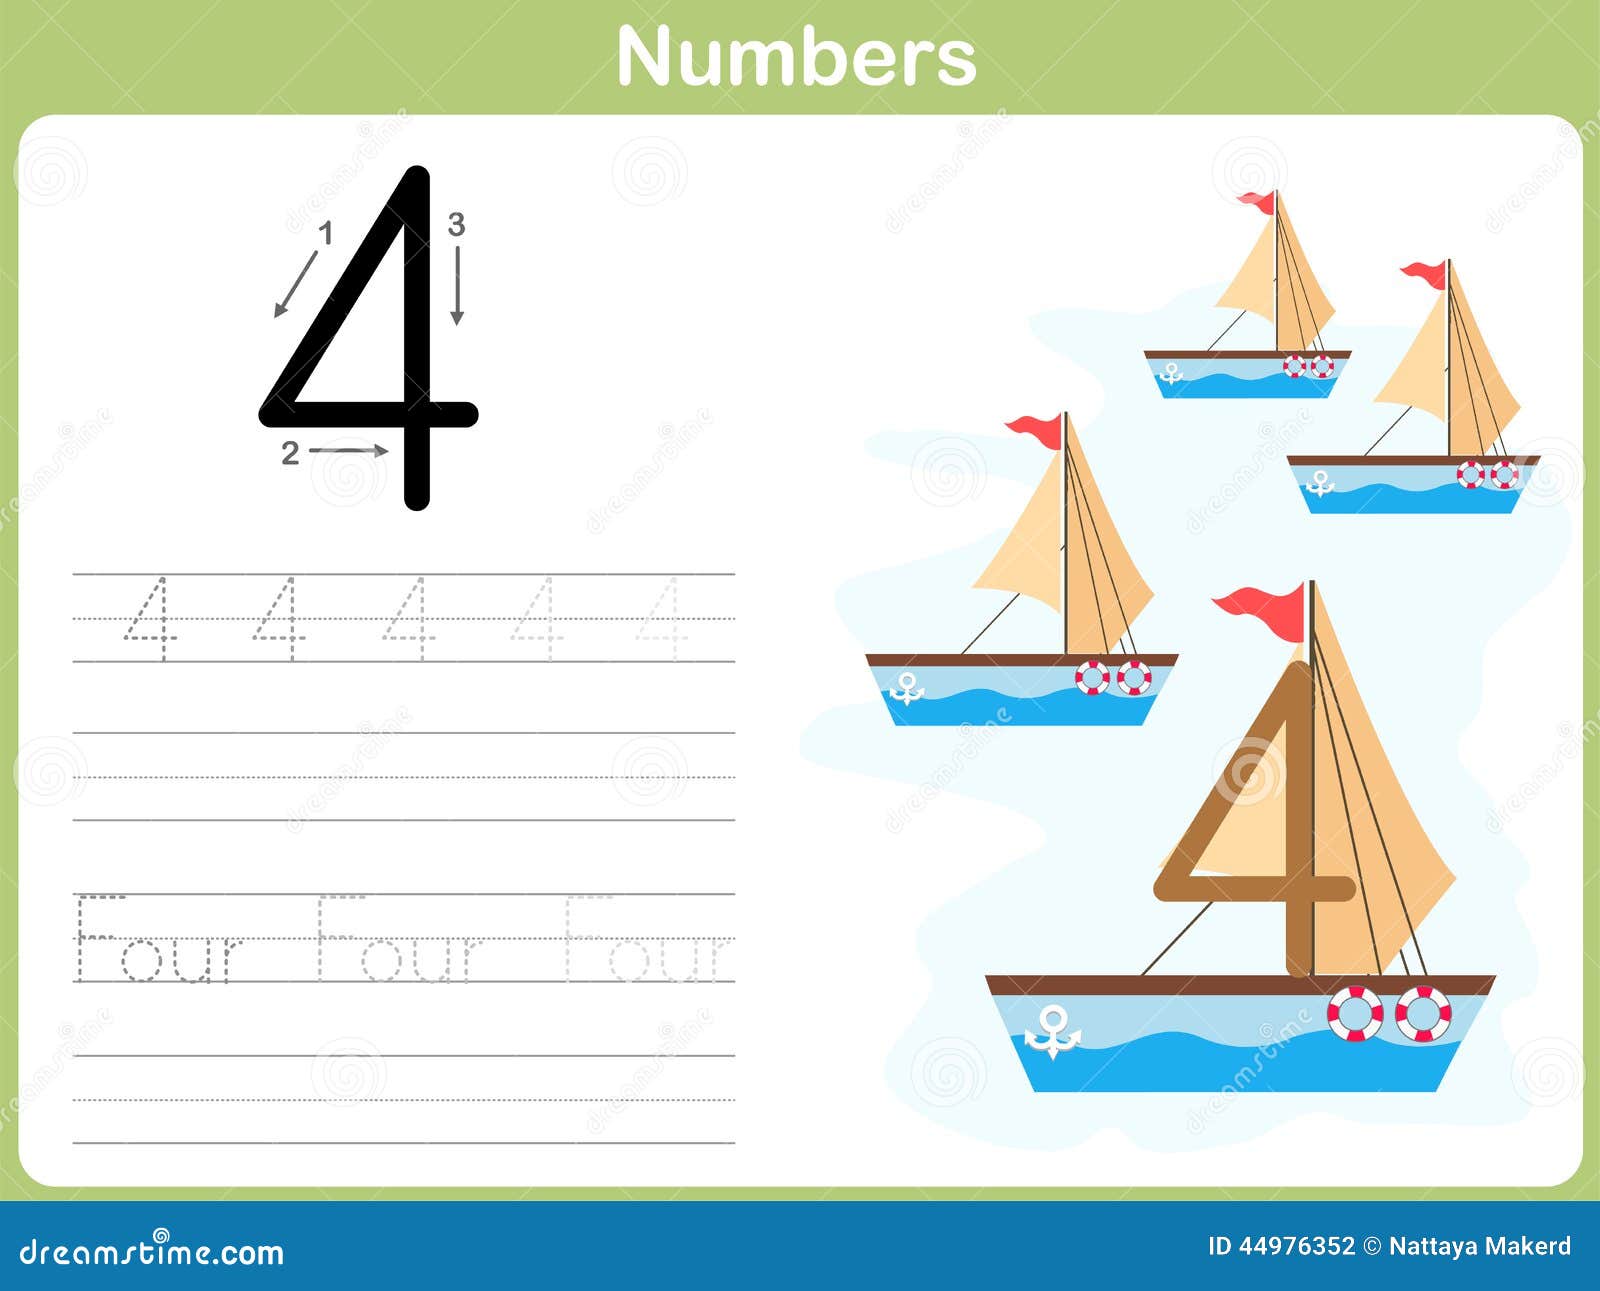 number tracing worksheet: writing 0-9